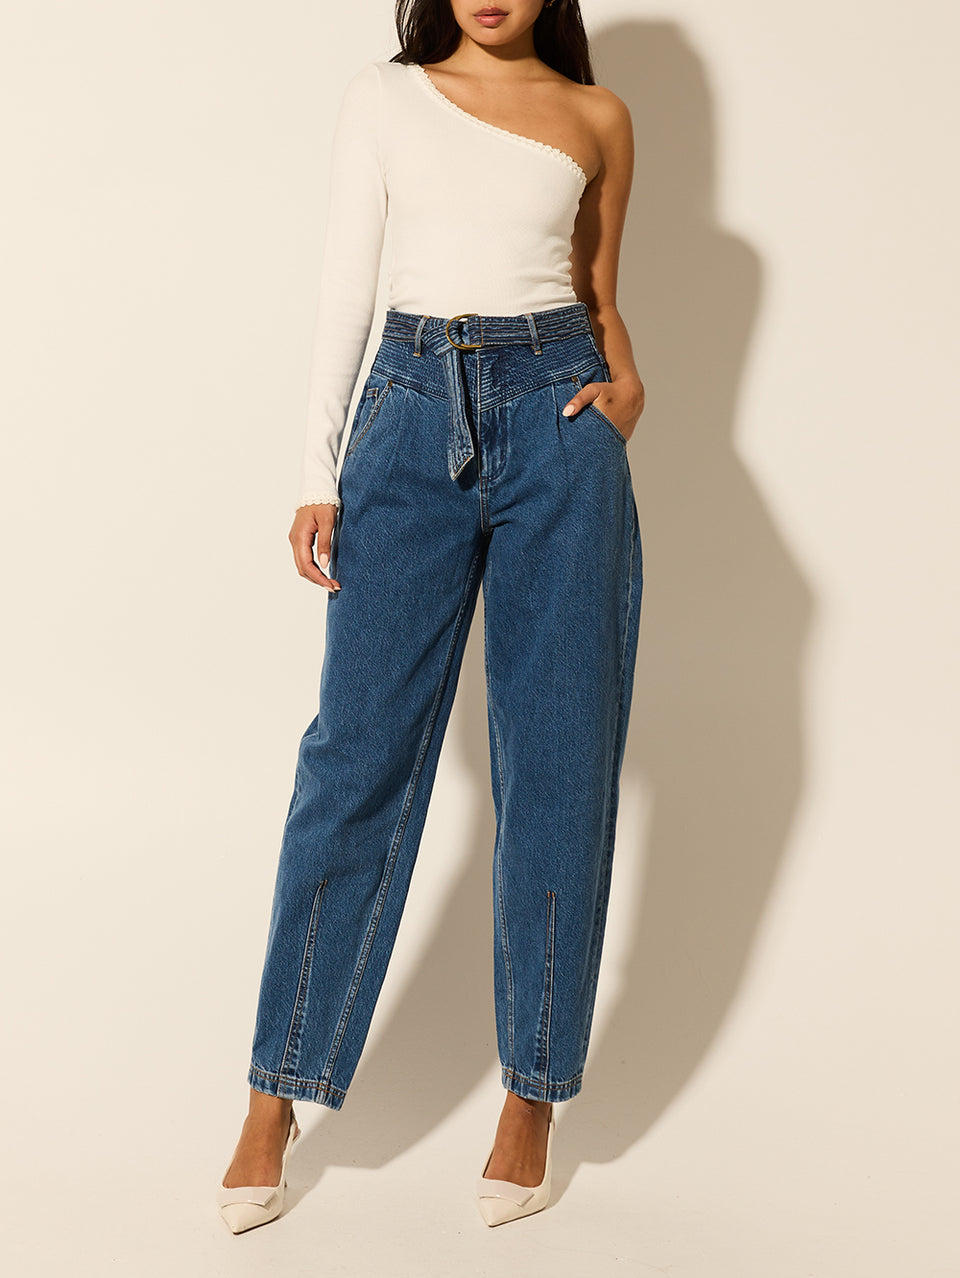 Adina Jean KIVARI | Model wears blue denim jean with white top